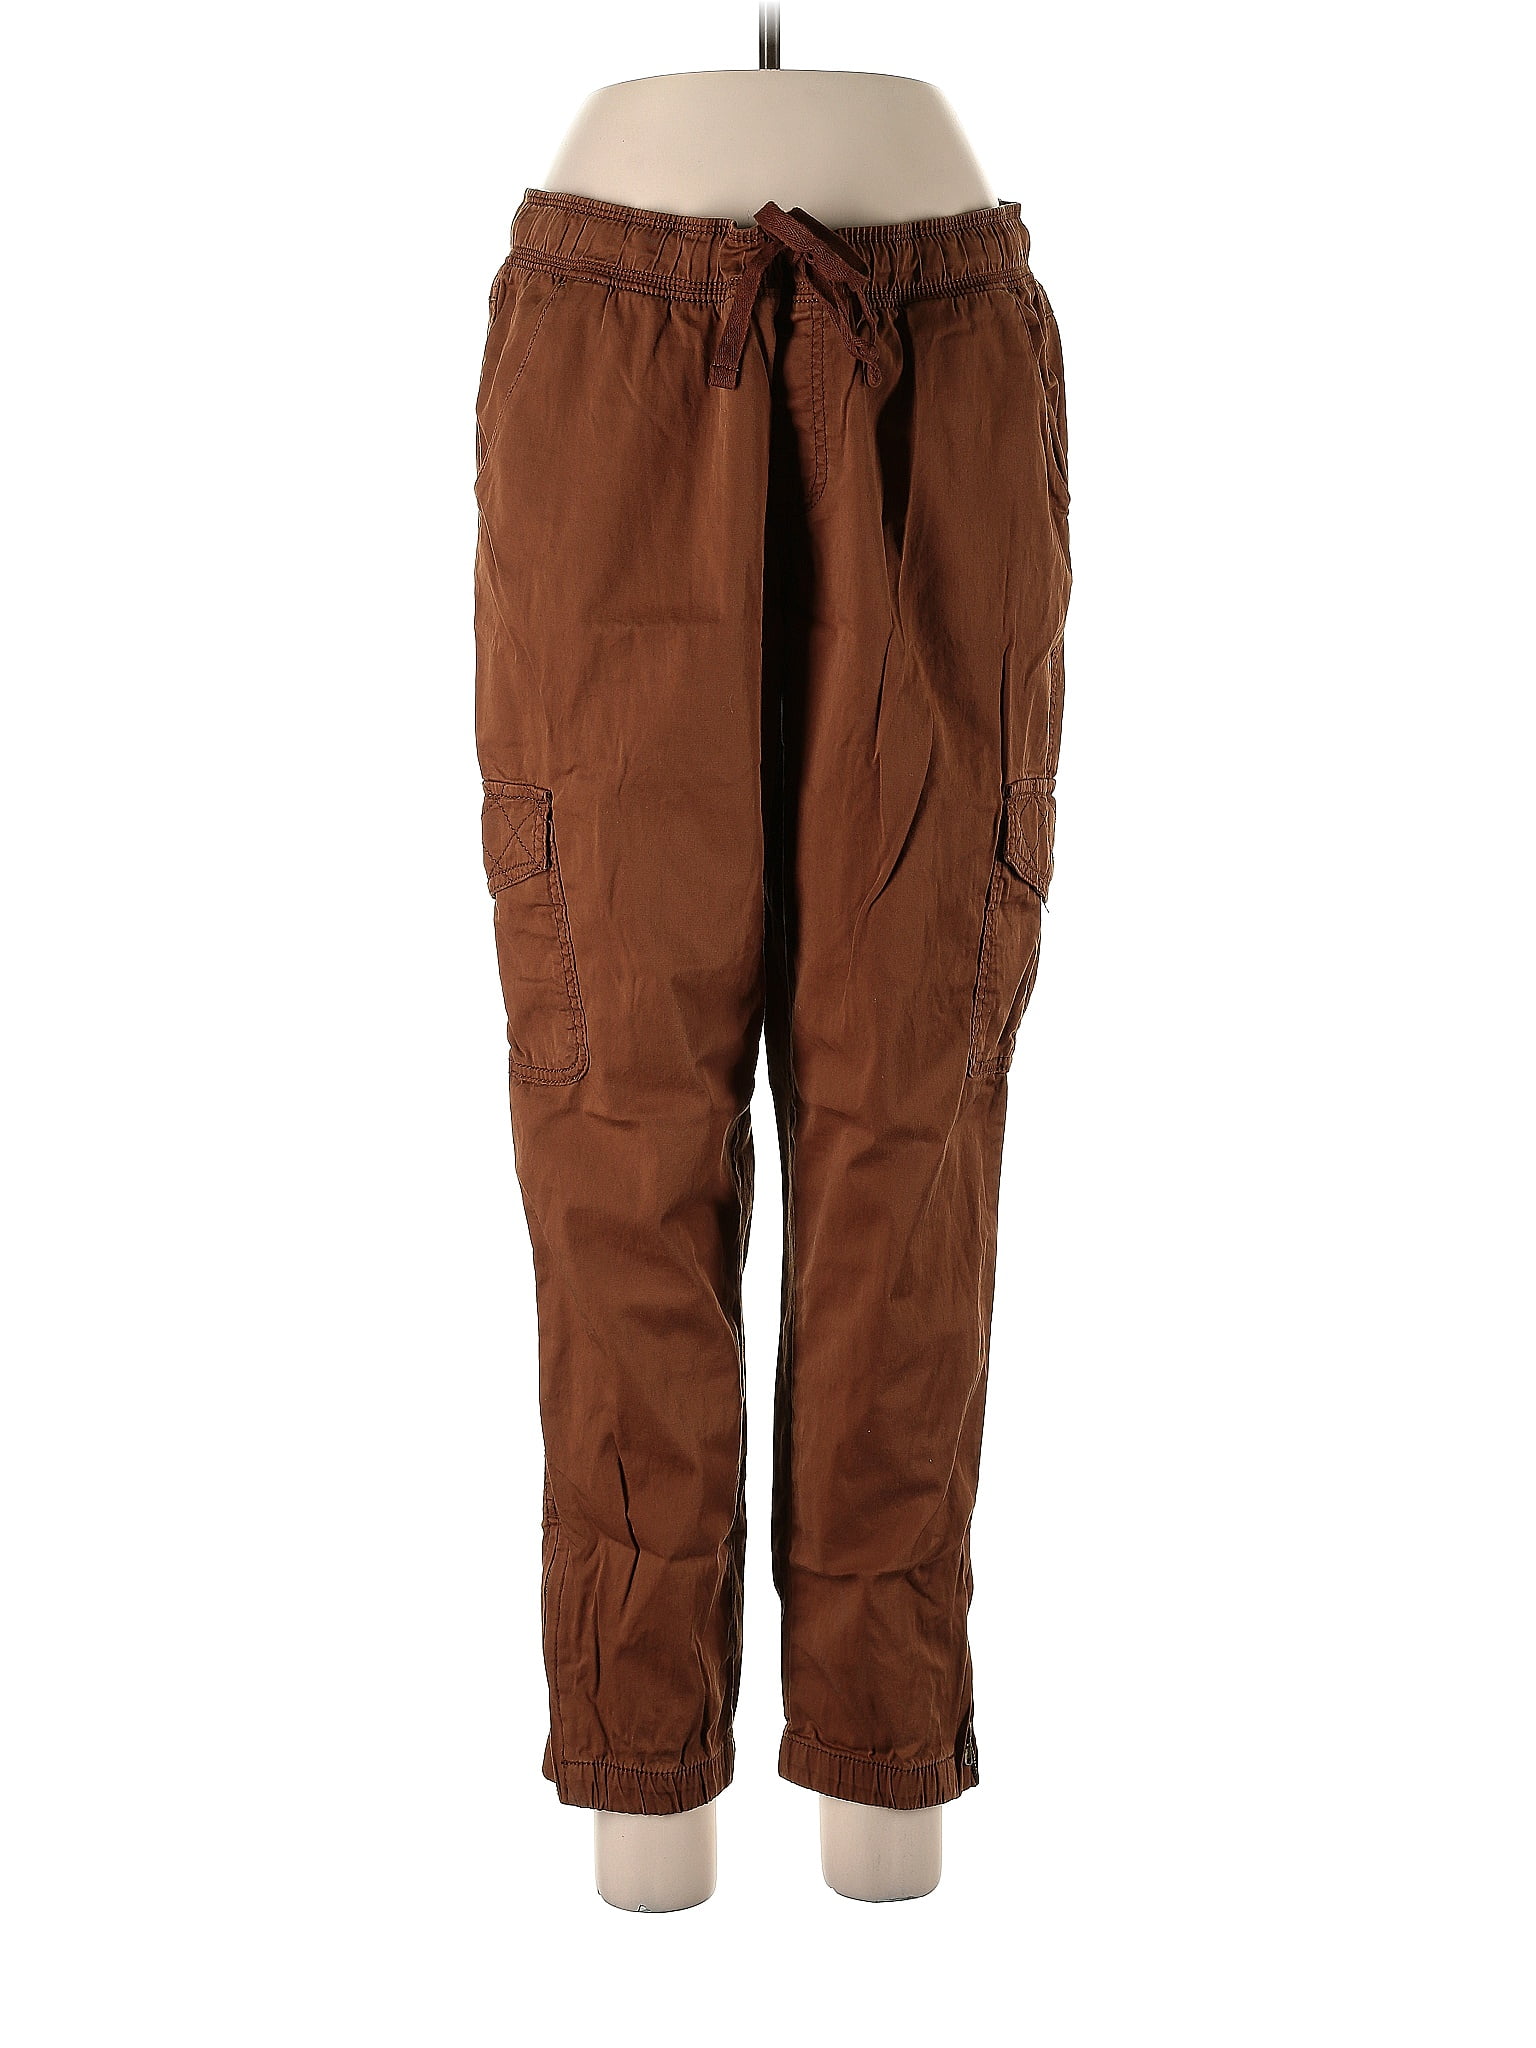 GAIAM Black Cargo Pants Size XL - 52% off